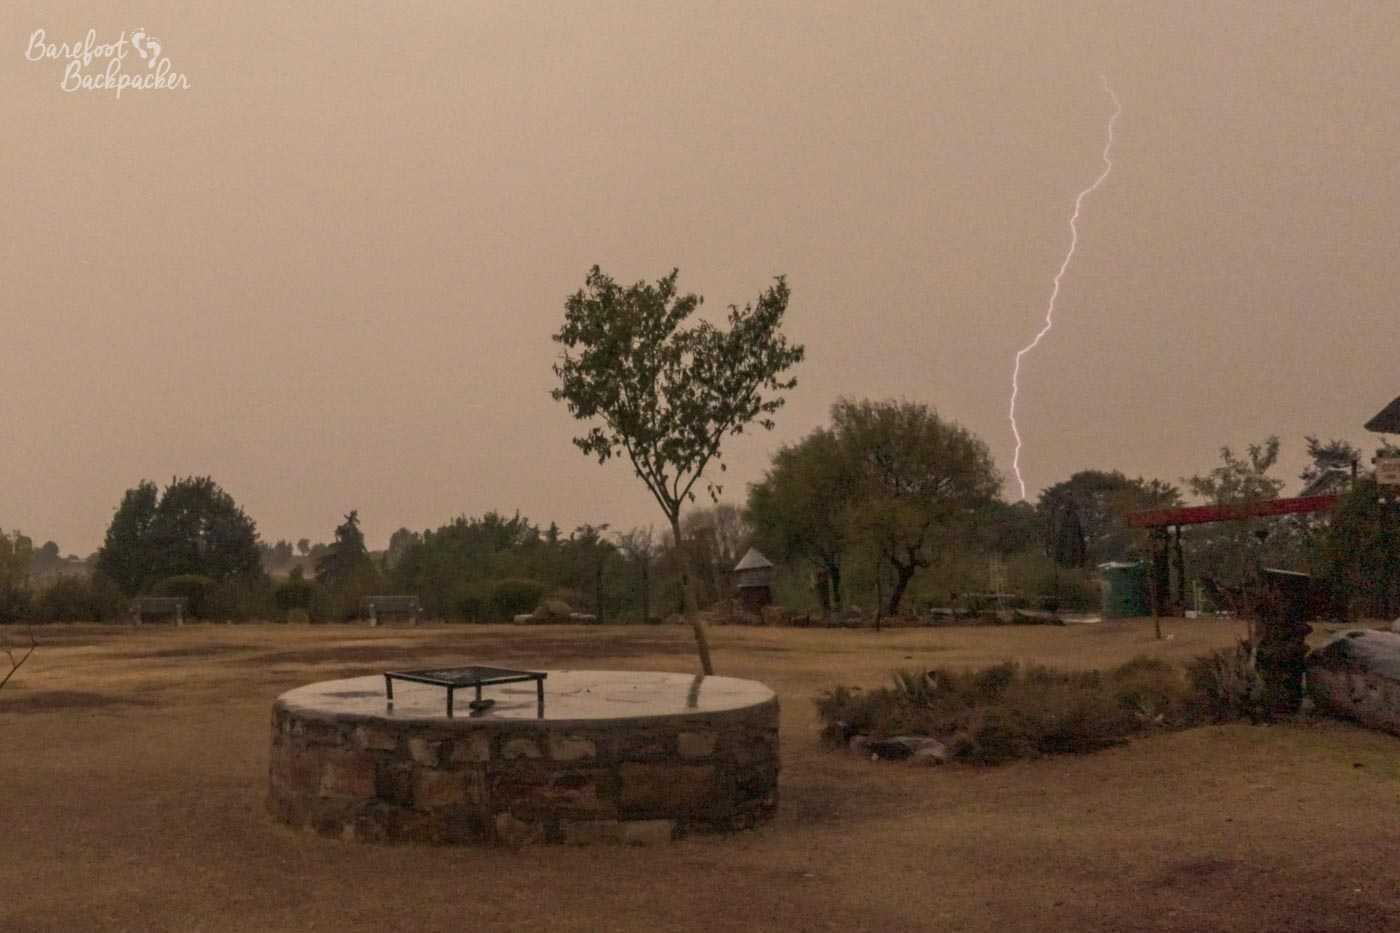 Lightning bolt during a heavy storm in Malealea, Lesotho